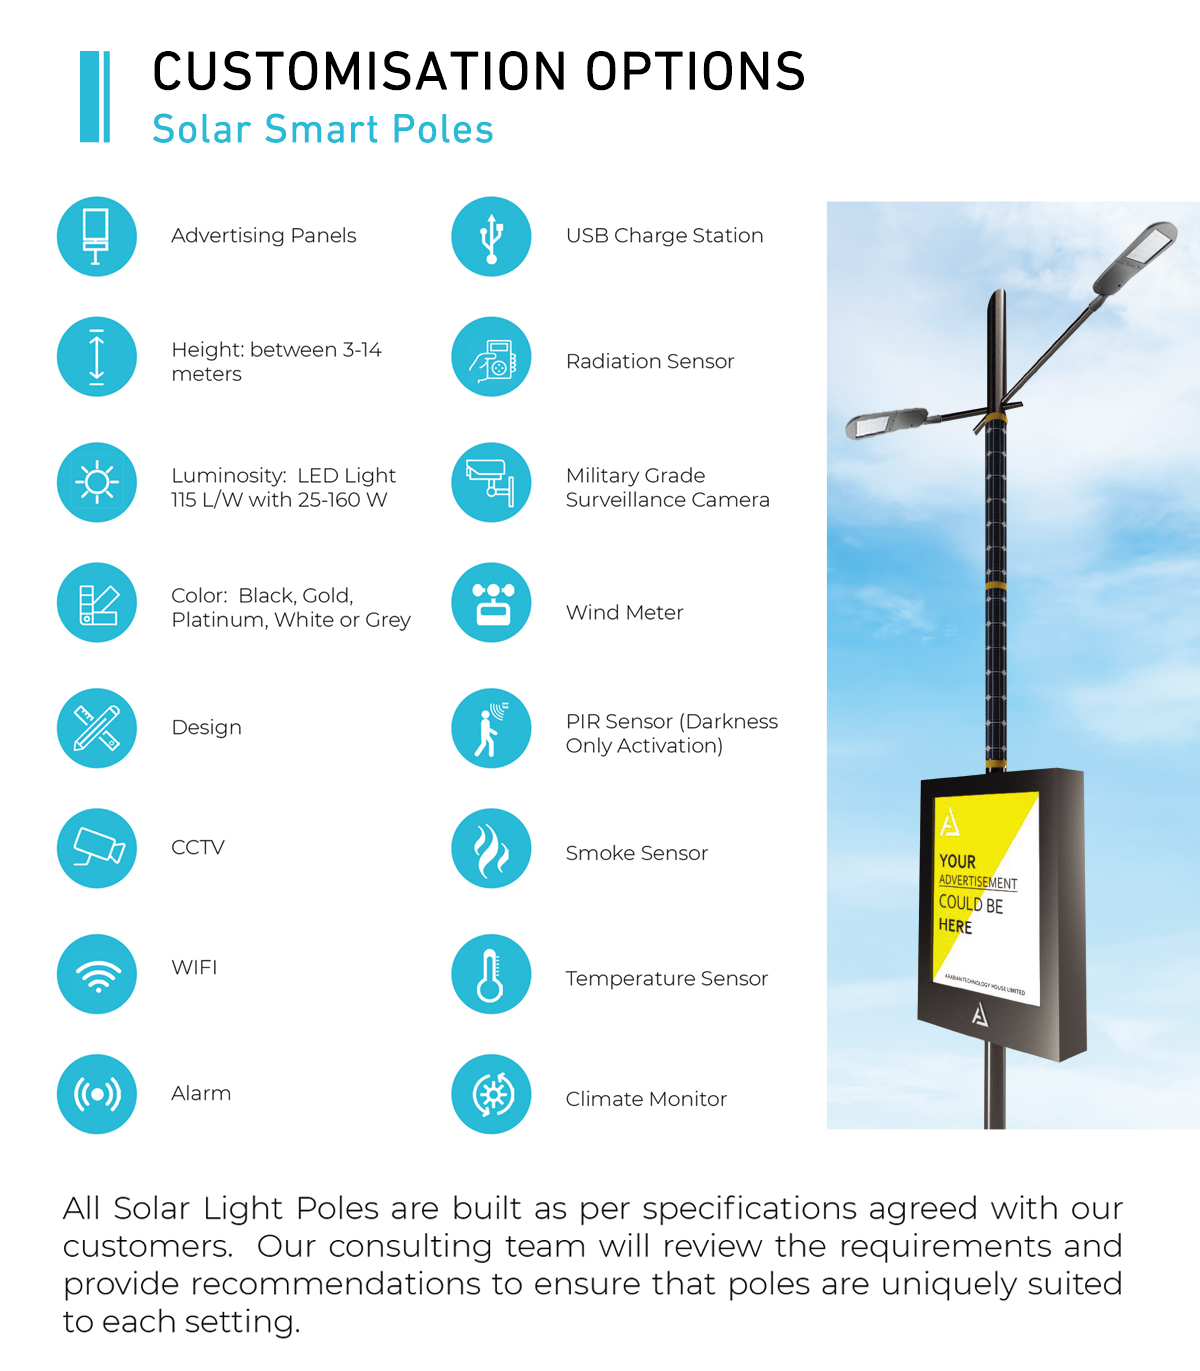 Solar smart poles with billboards